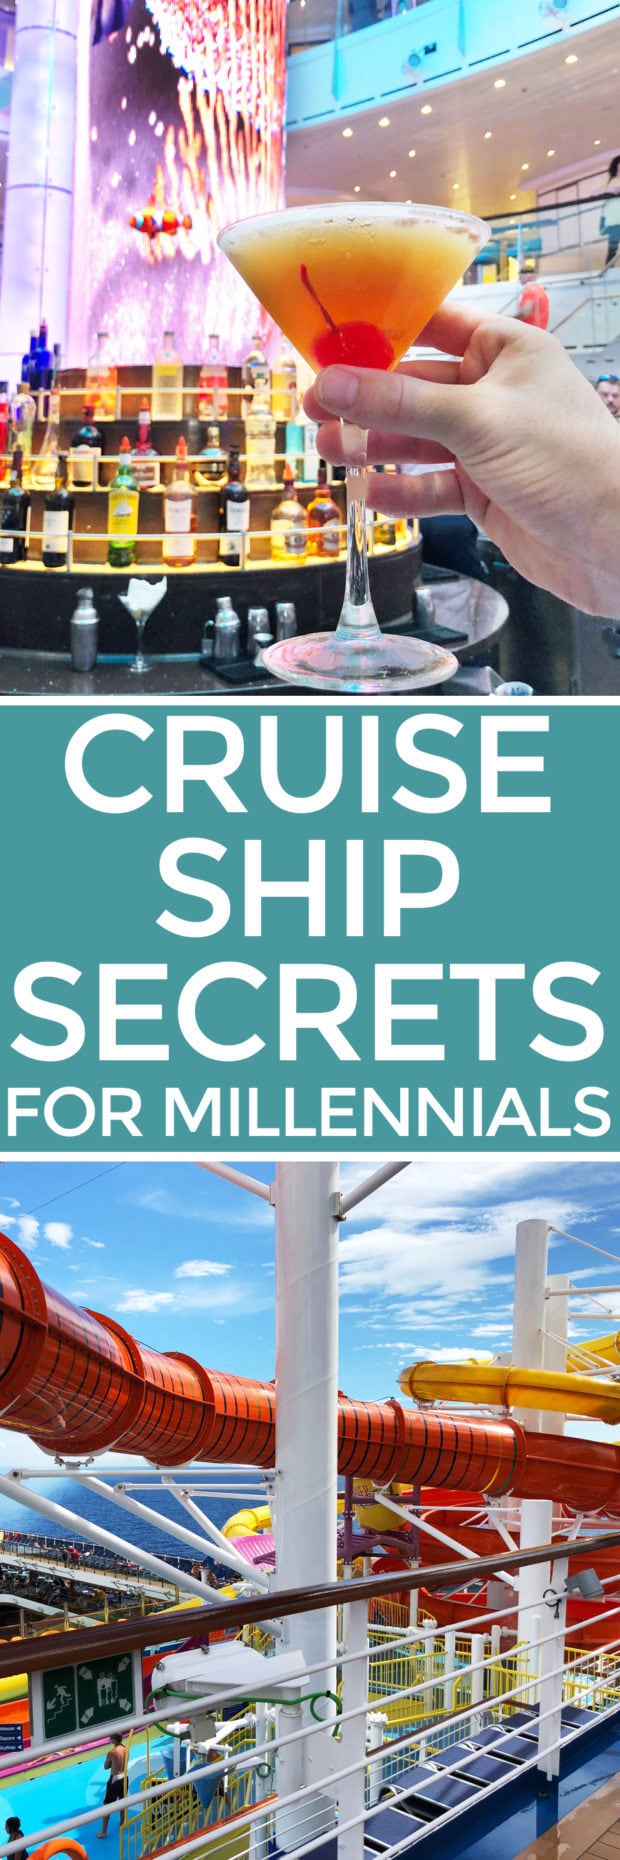 Cruise Ship Secrets for Millennials | cakenknife.com #cruisingcarnival #cruising #tipsandtricks #carnivalvista #sponsored